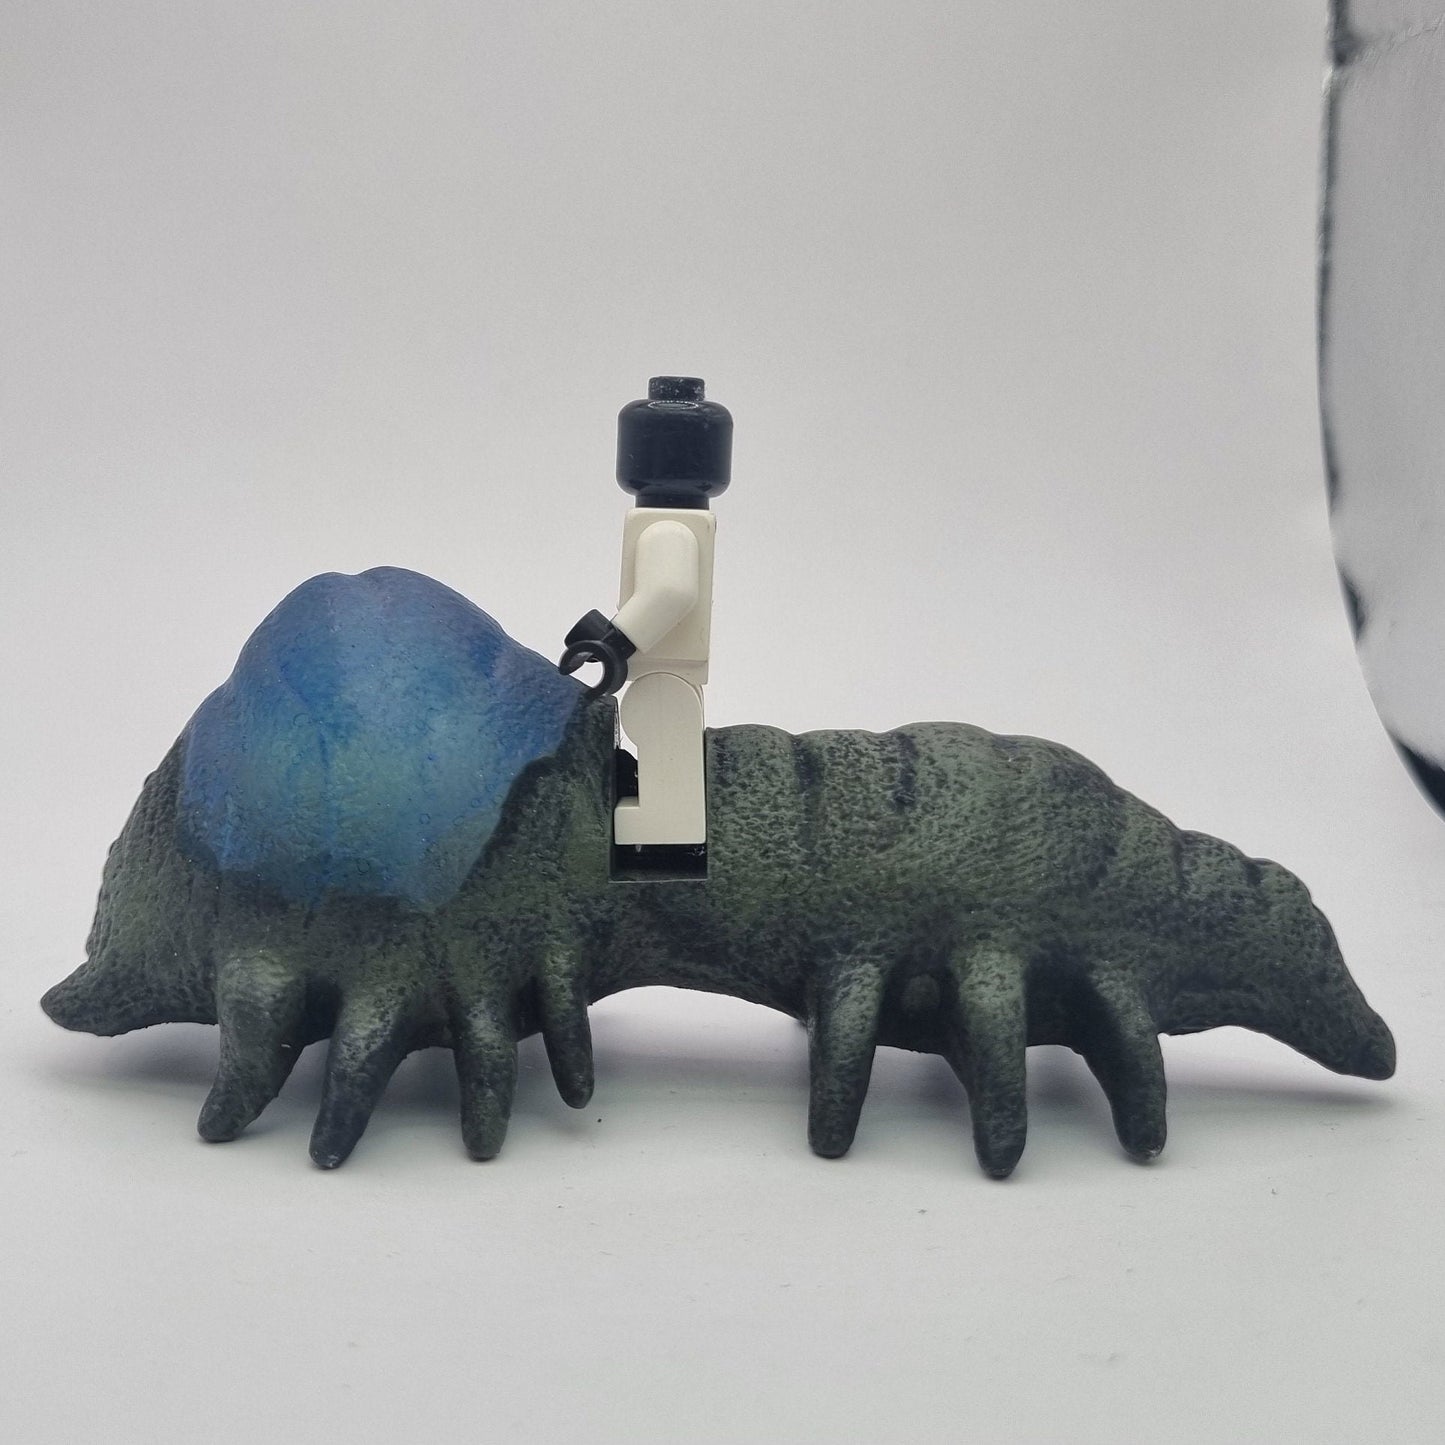 Building toy custom 3D fully painted slug!